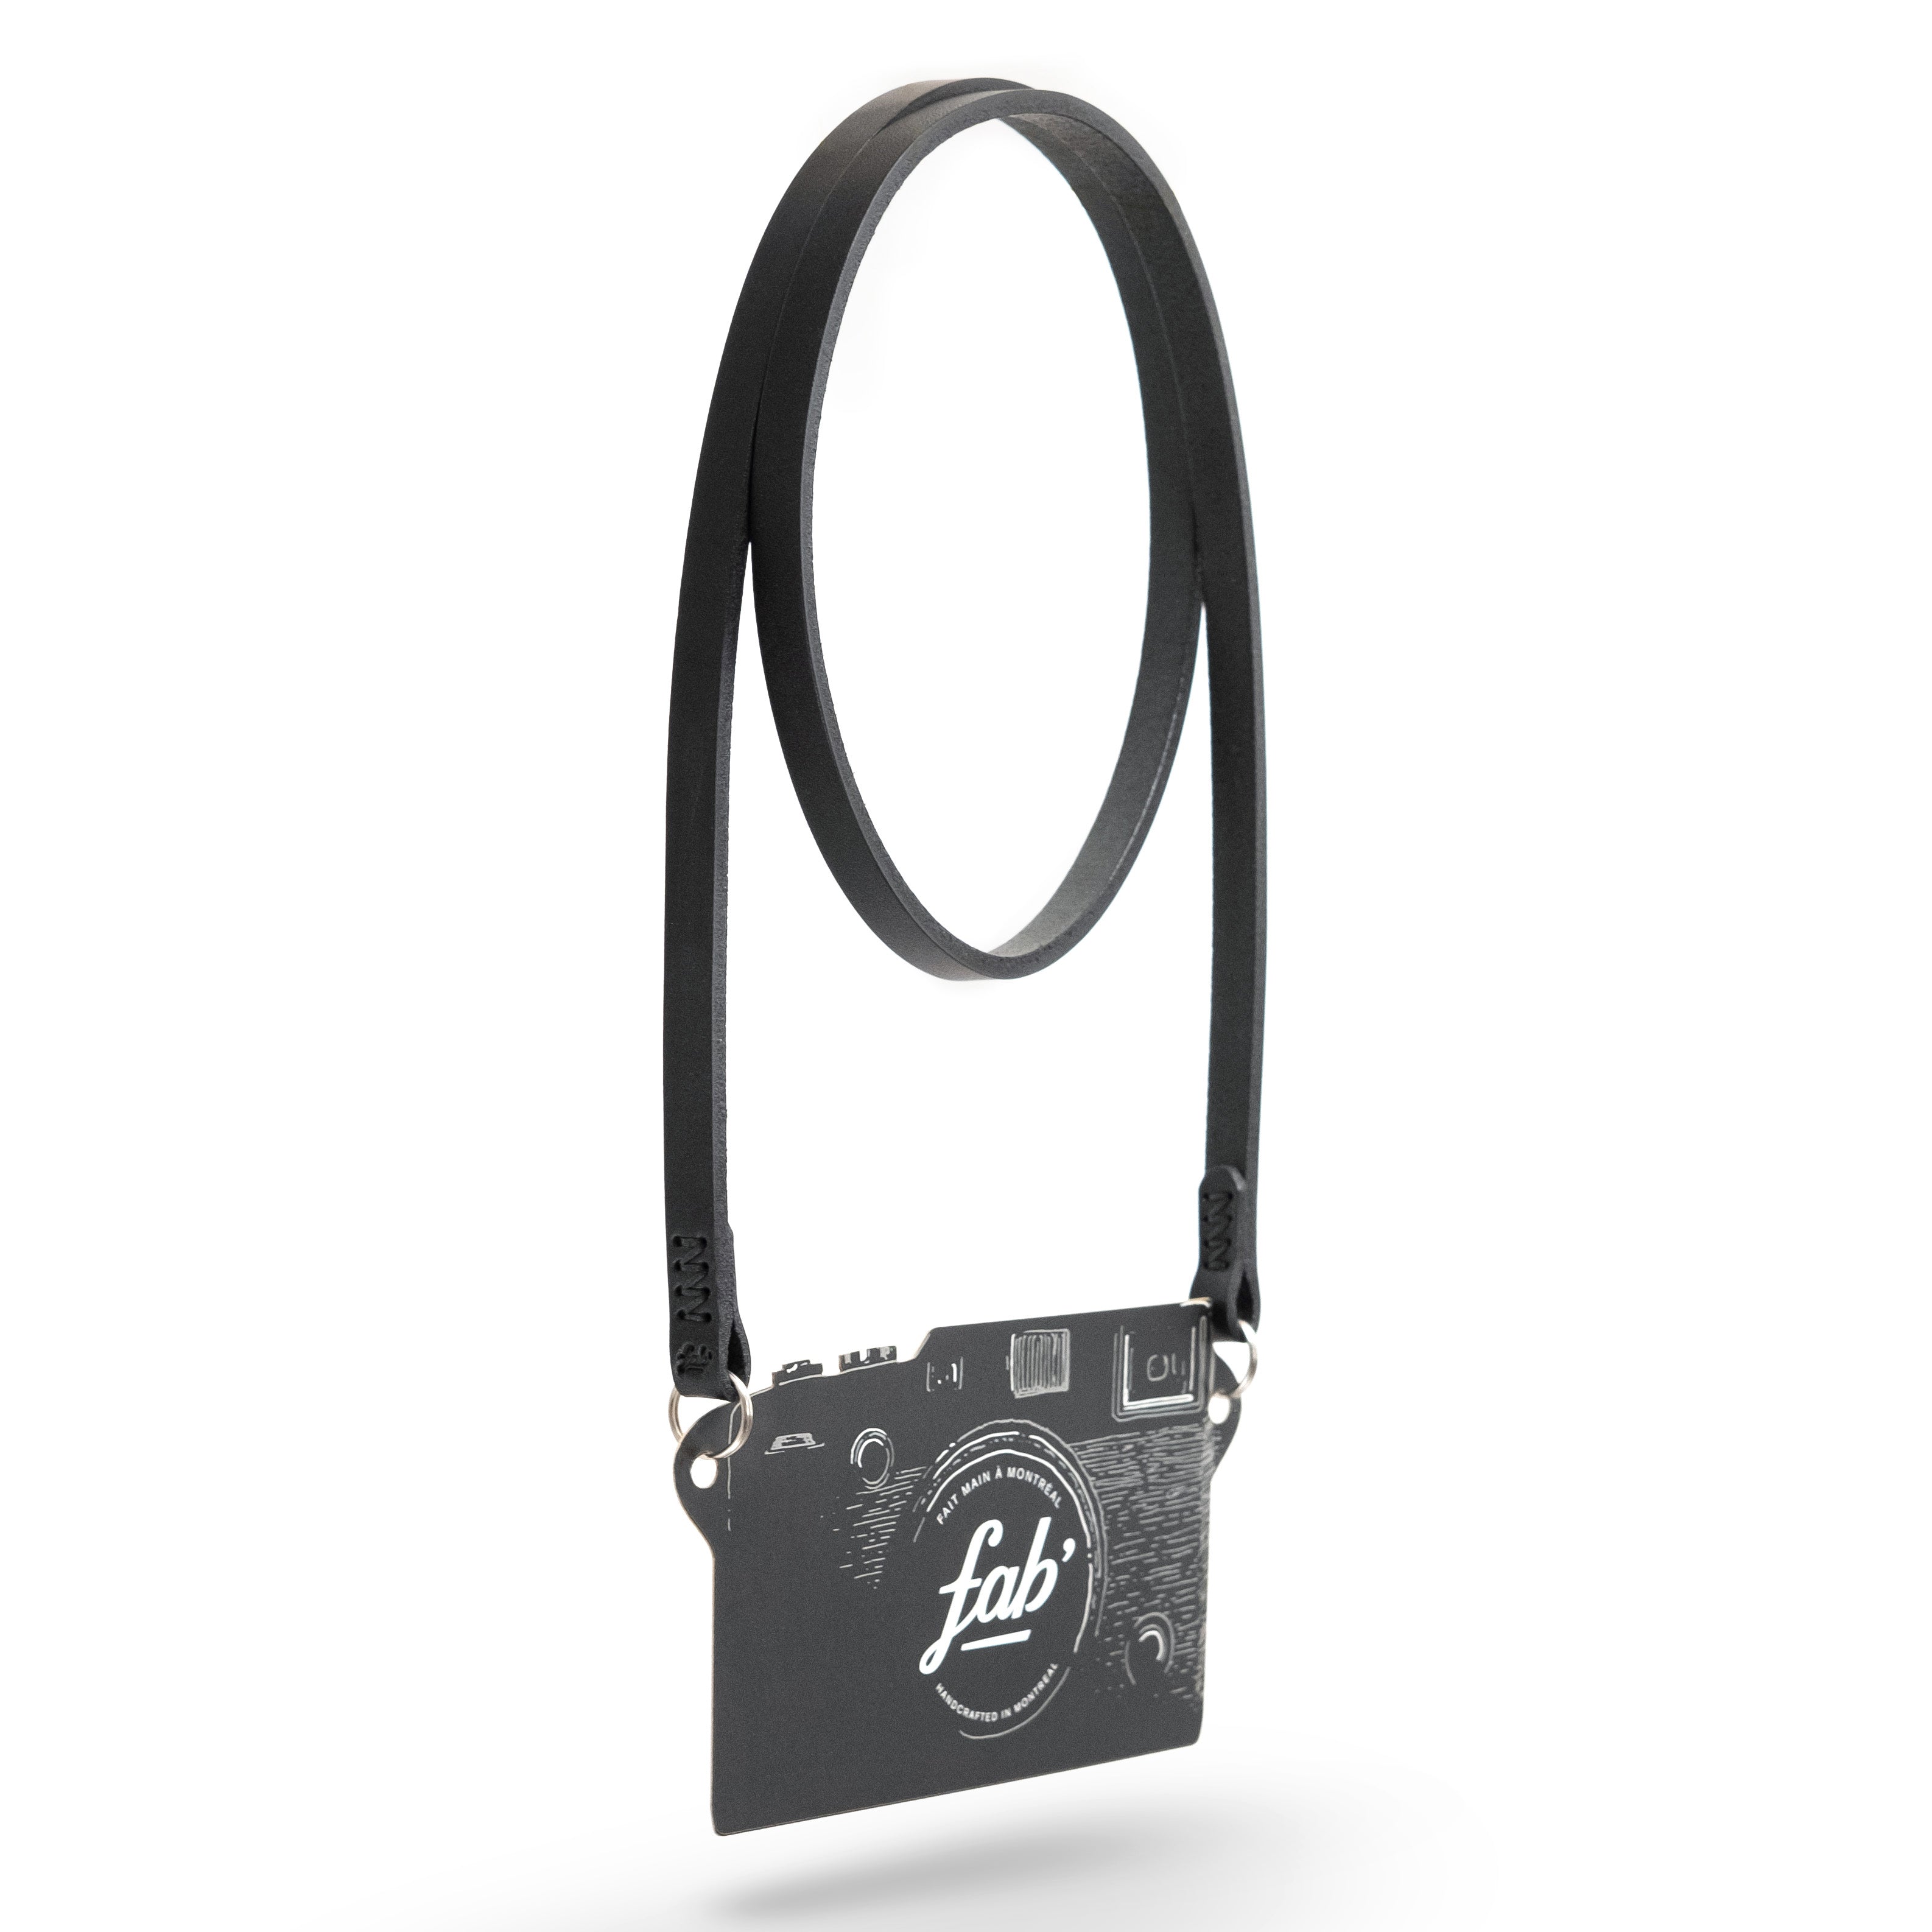 Fab' F4 strap - Black leather - Size M-L (47")